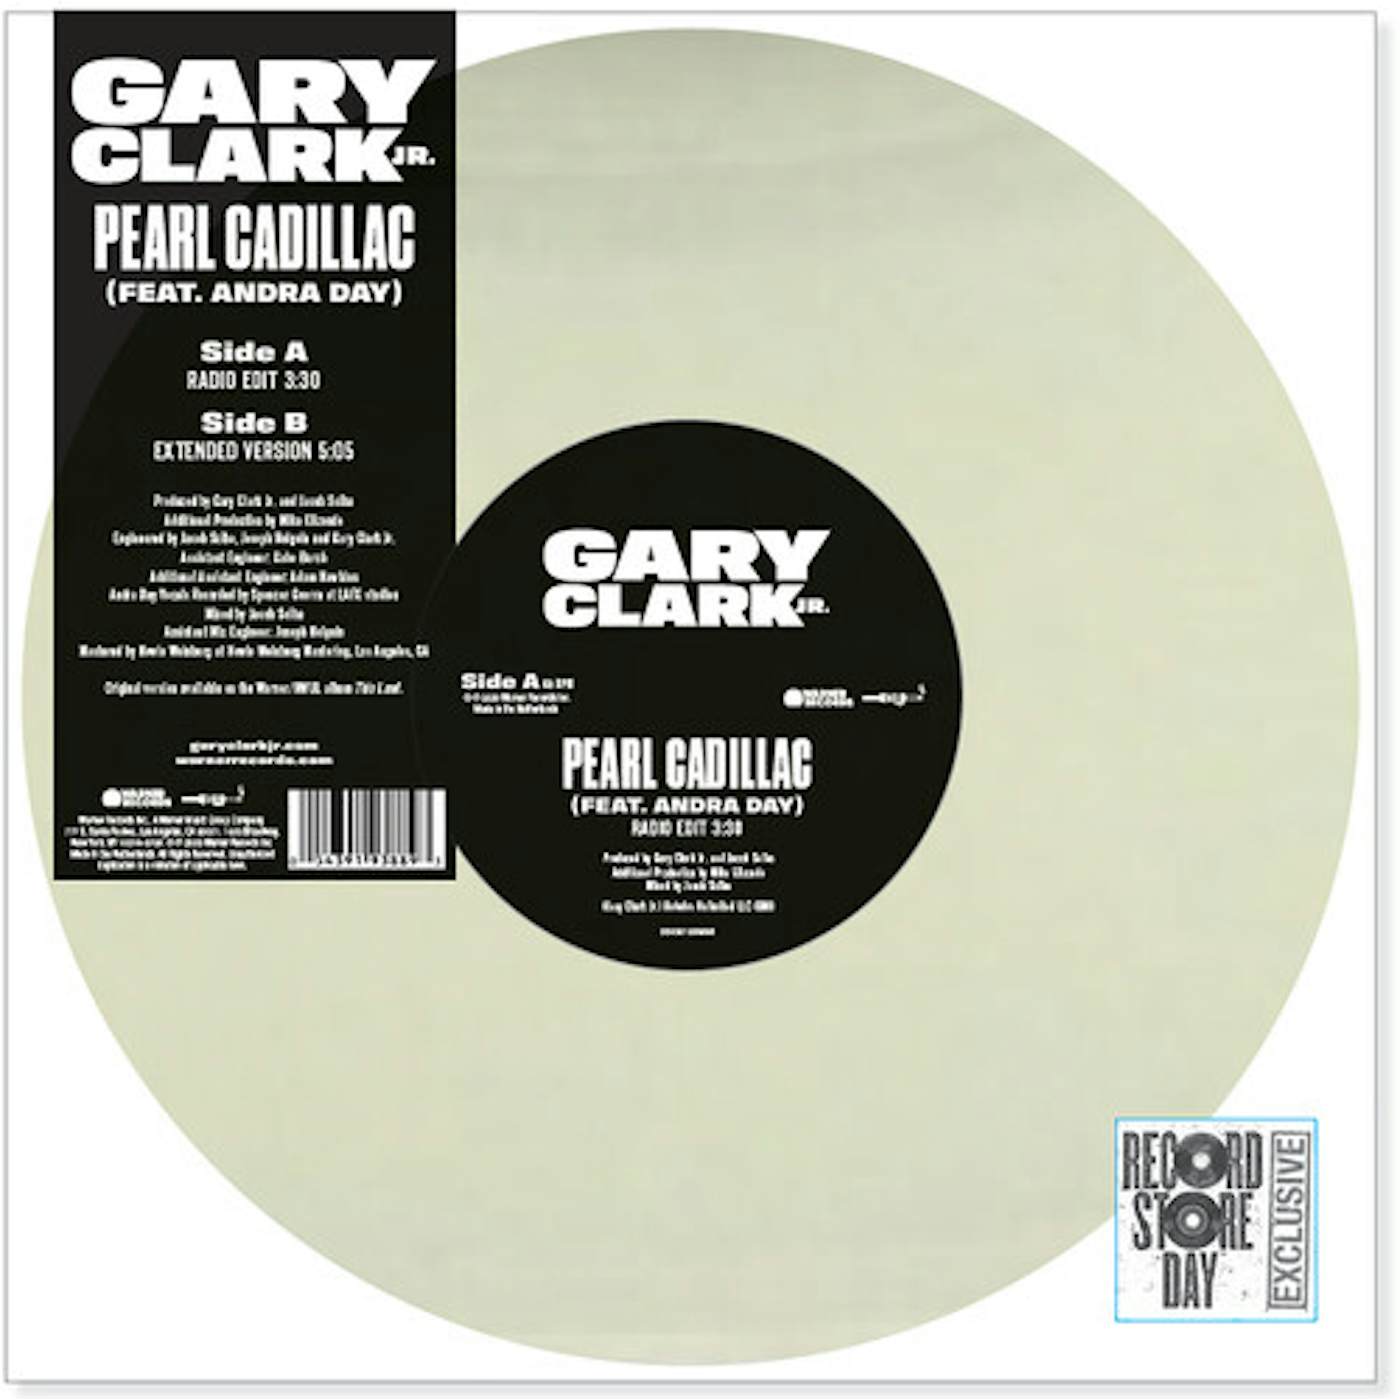 Gary Clark Jr. PEARL CADILLAC Vinyl Record